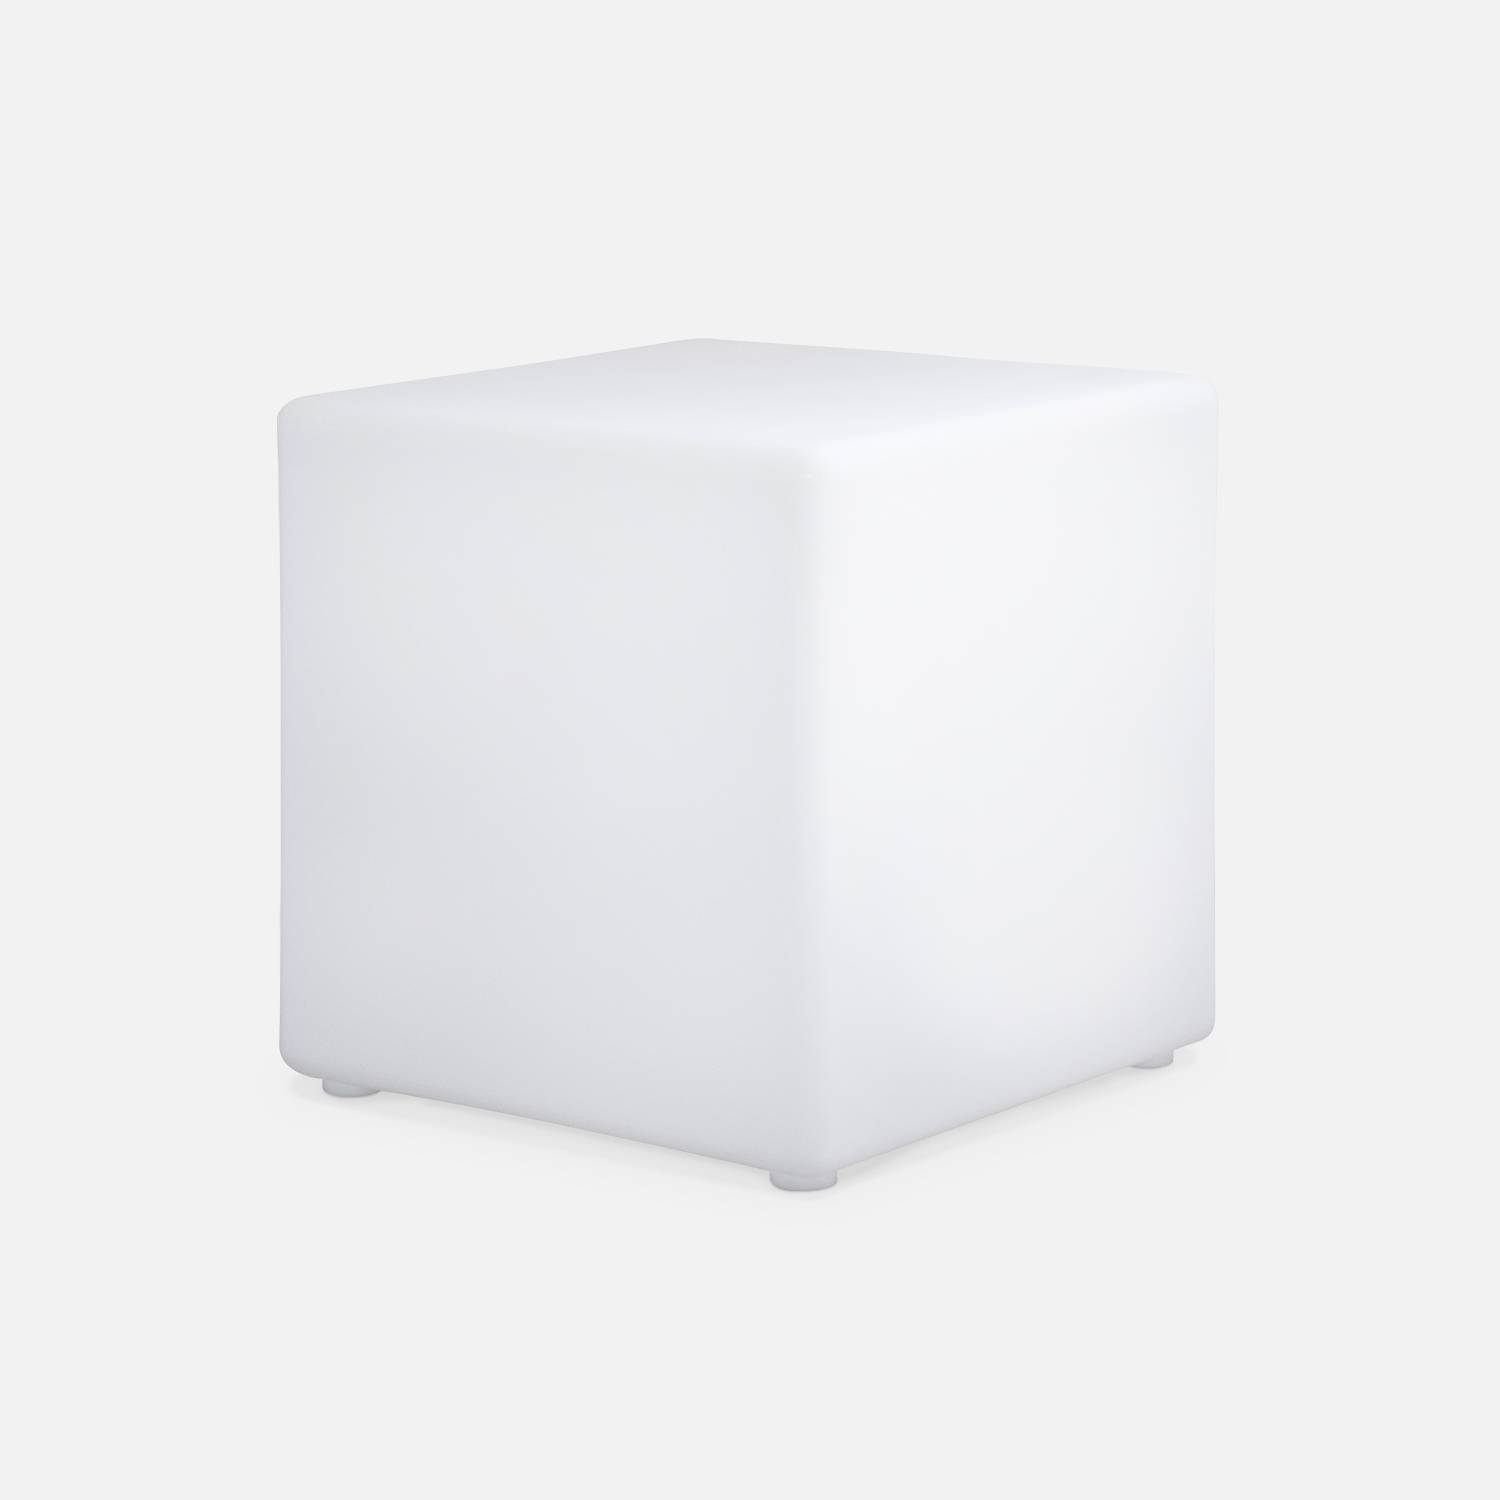 LED Cube 40cm - Cubo de luz decorativo, 16 cores, 40cm, recarregável, controlo remoto Photo2